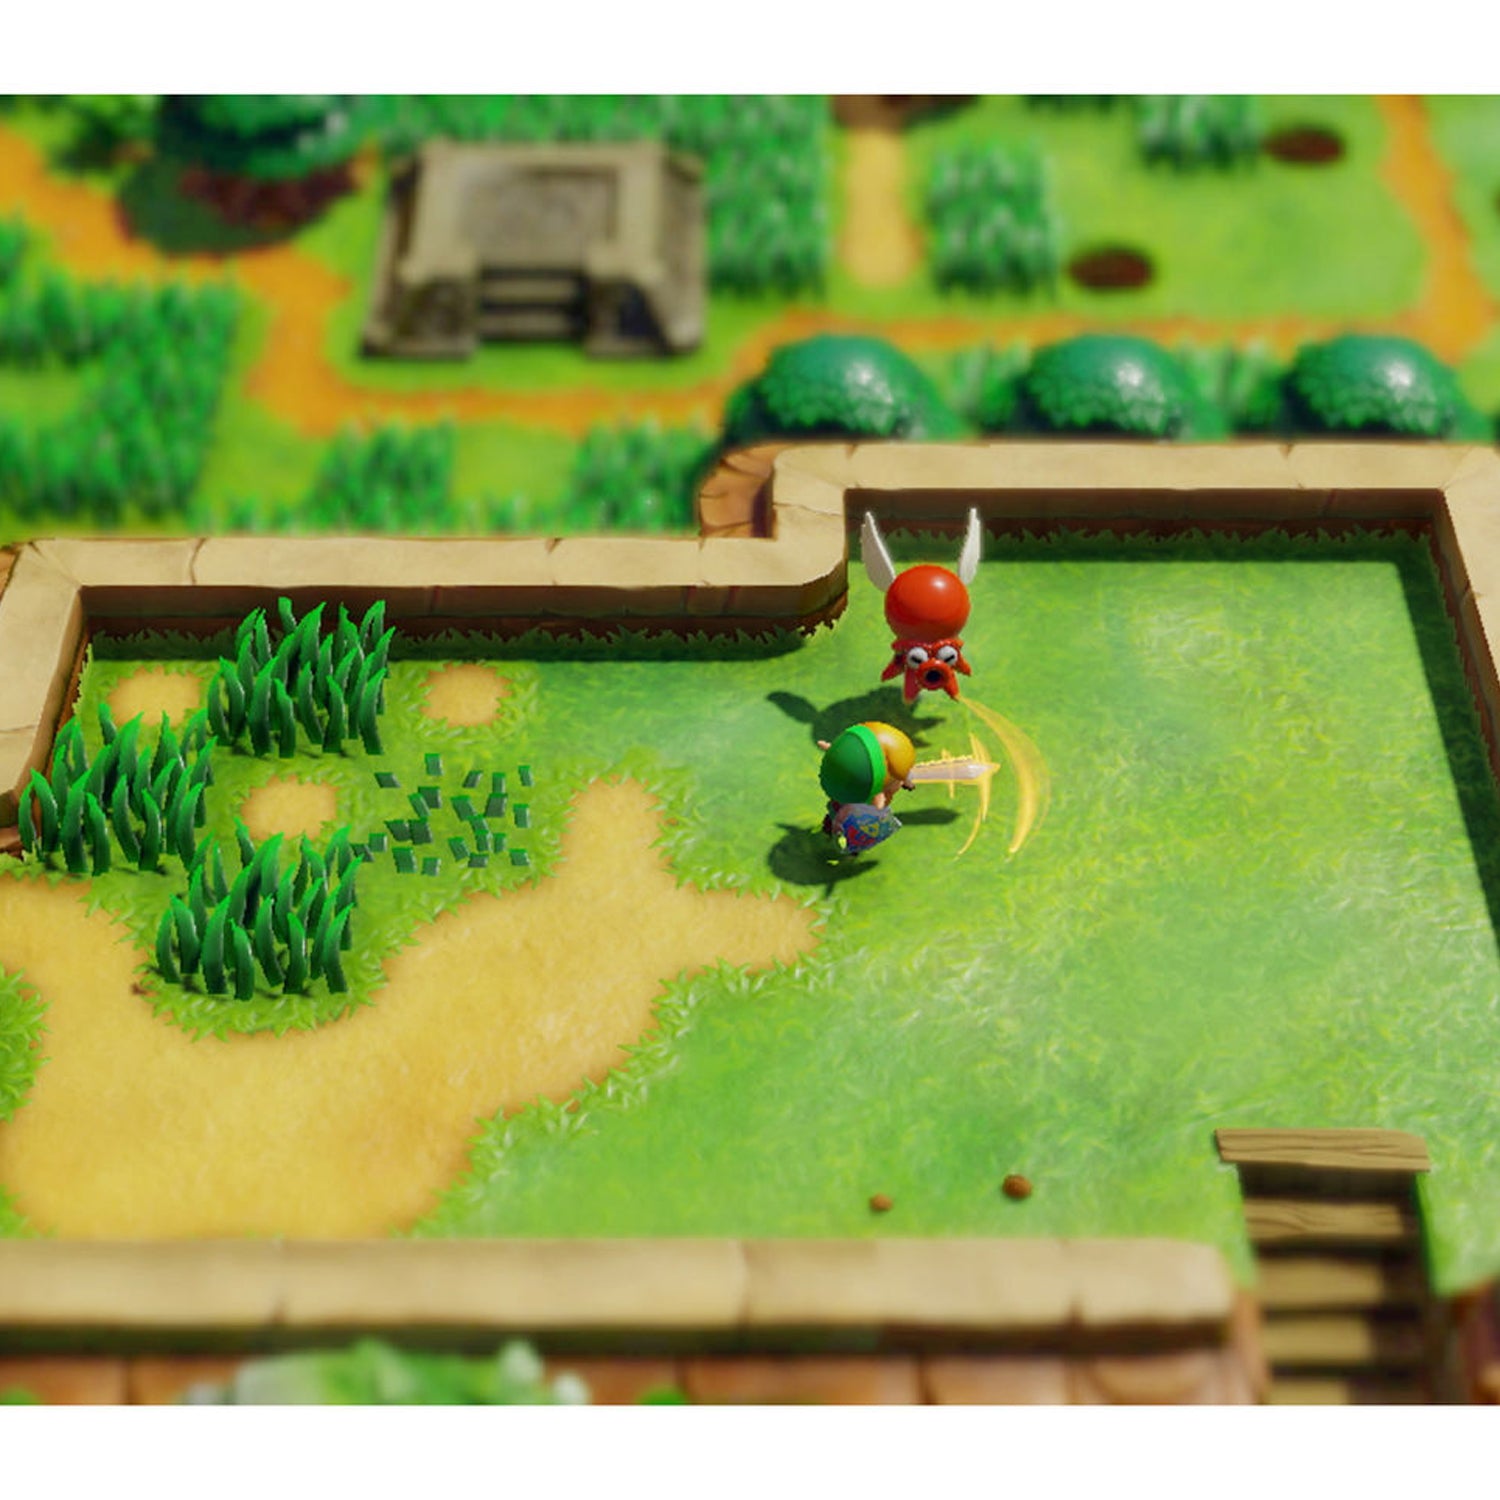 Nintendo Switch Lite Console Bundle with The Legend of Zelda: Links Awakening